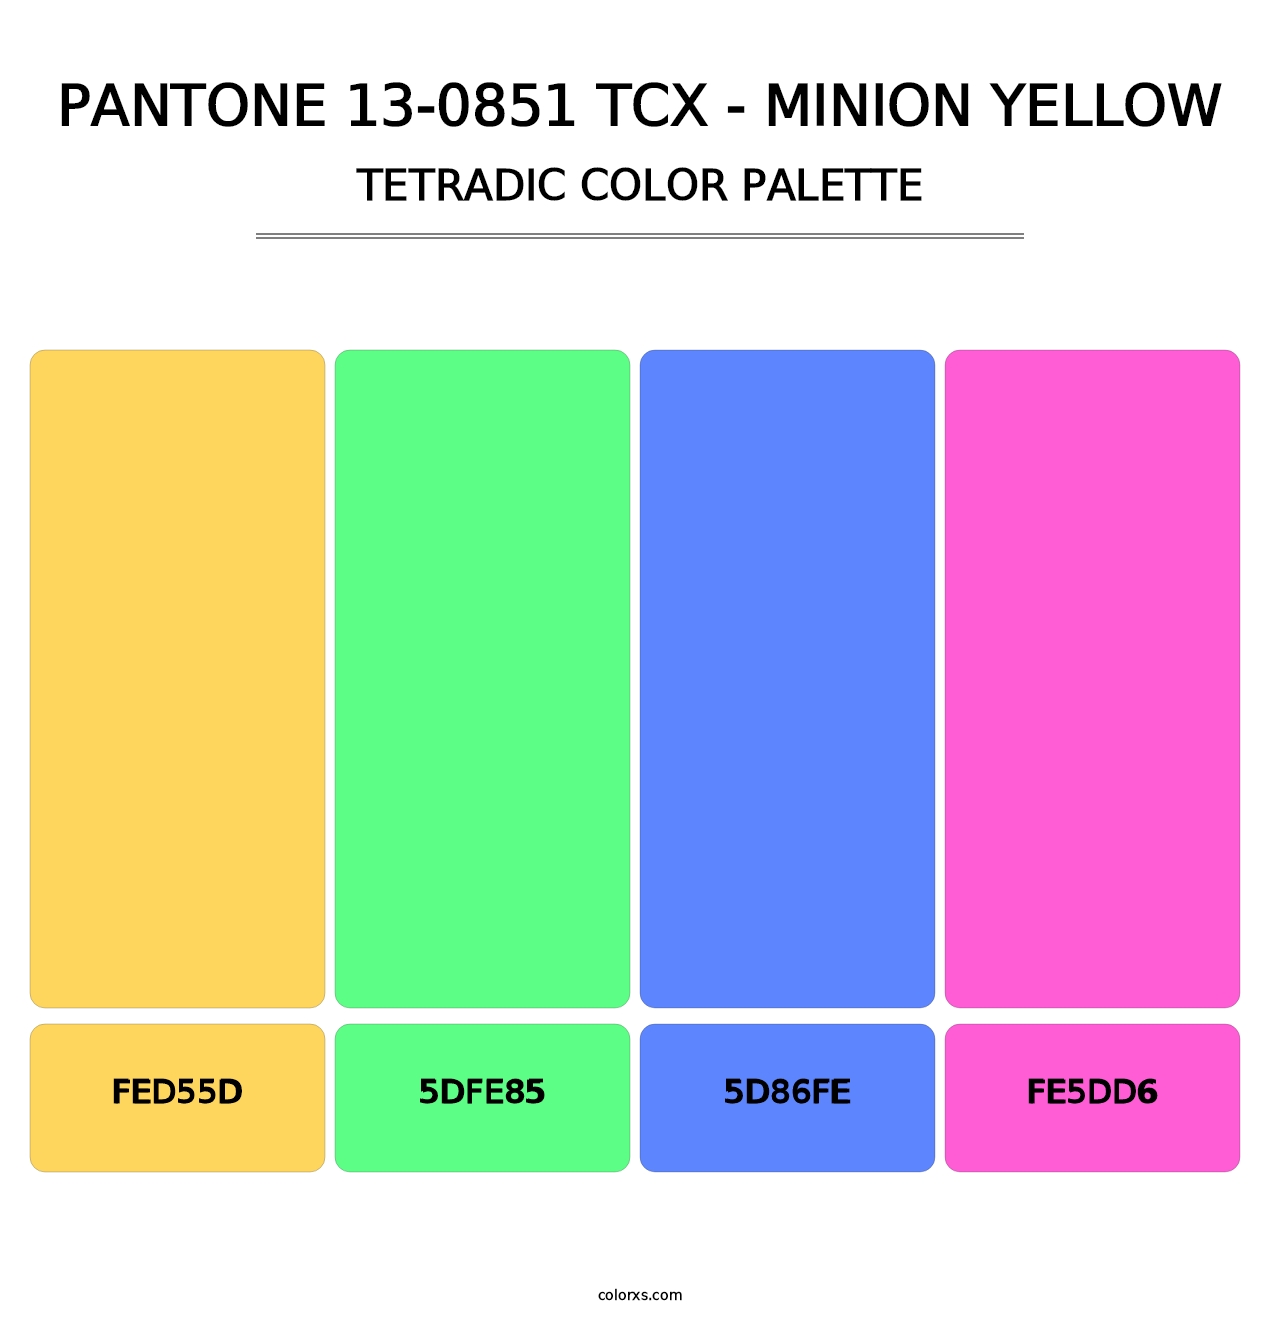 PANTONE 13-0851 TCX - Minion Yellow - Tetradic Color Palette